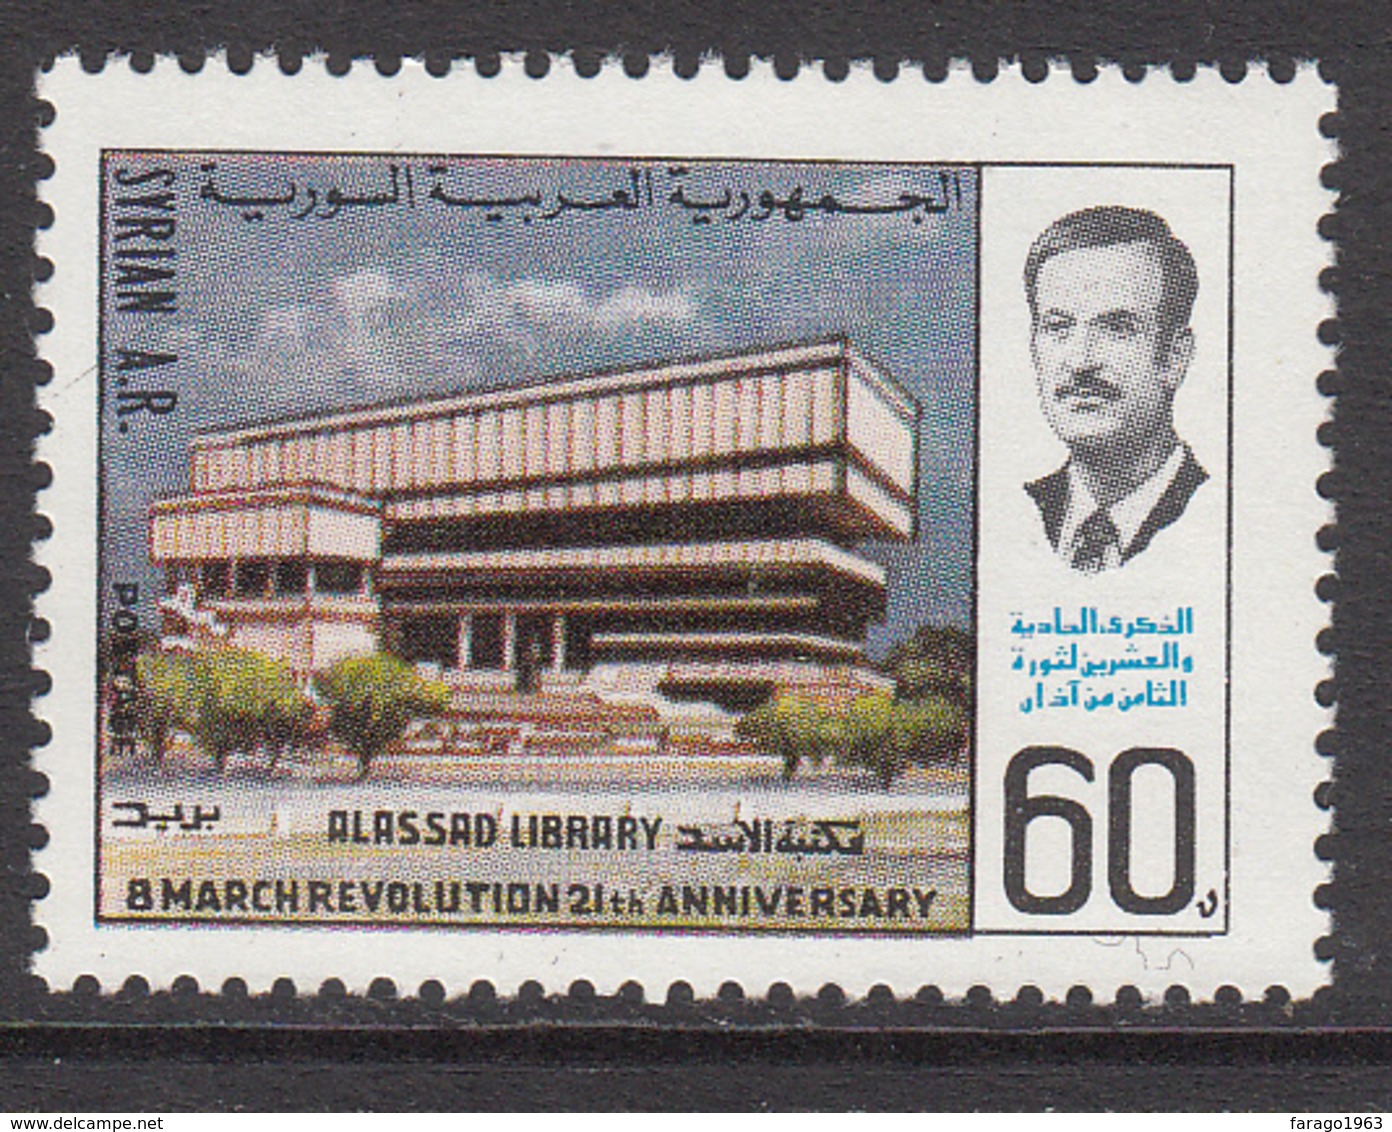 1984 Syria Anniv Of Revolution Alassad Library Set Of 1 MNH - Syrien